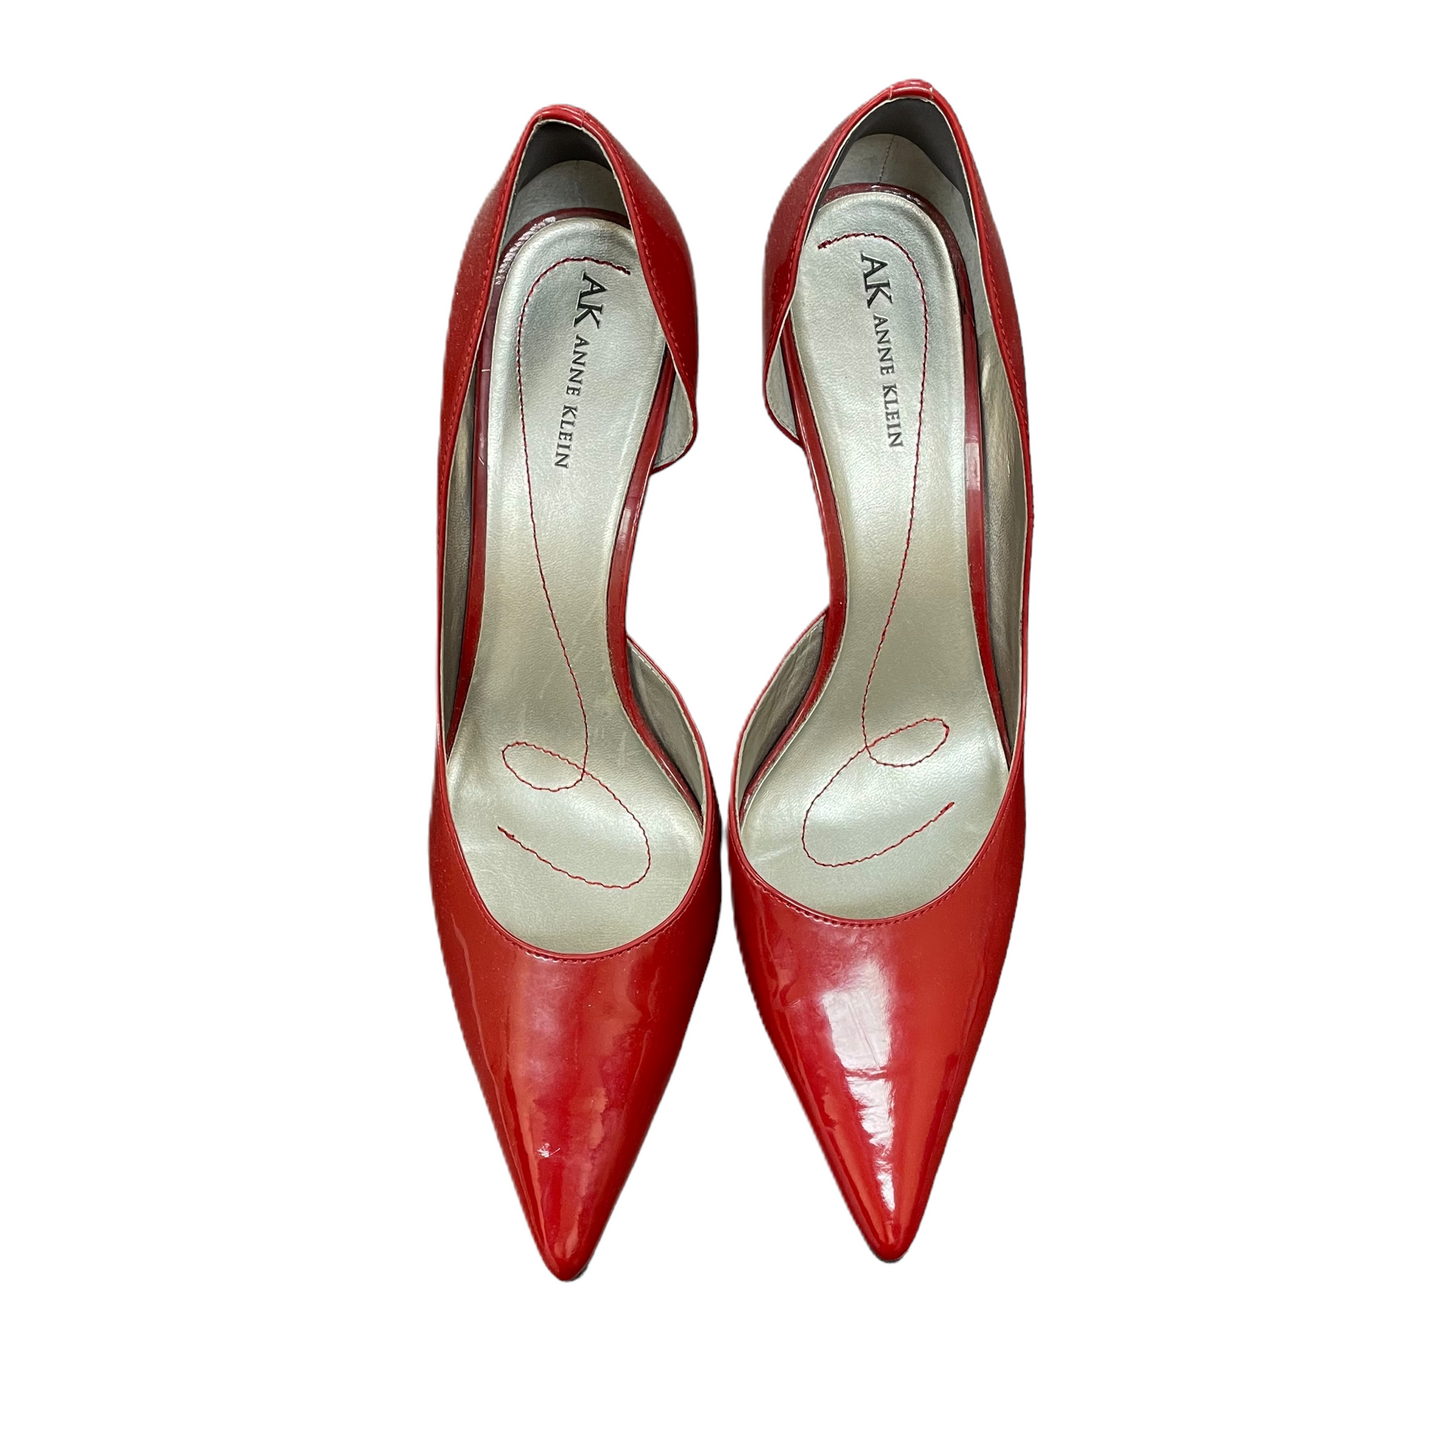 Red Shoes Heels Stiletto By Anne Klein, Size: 11